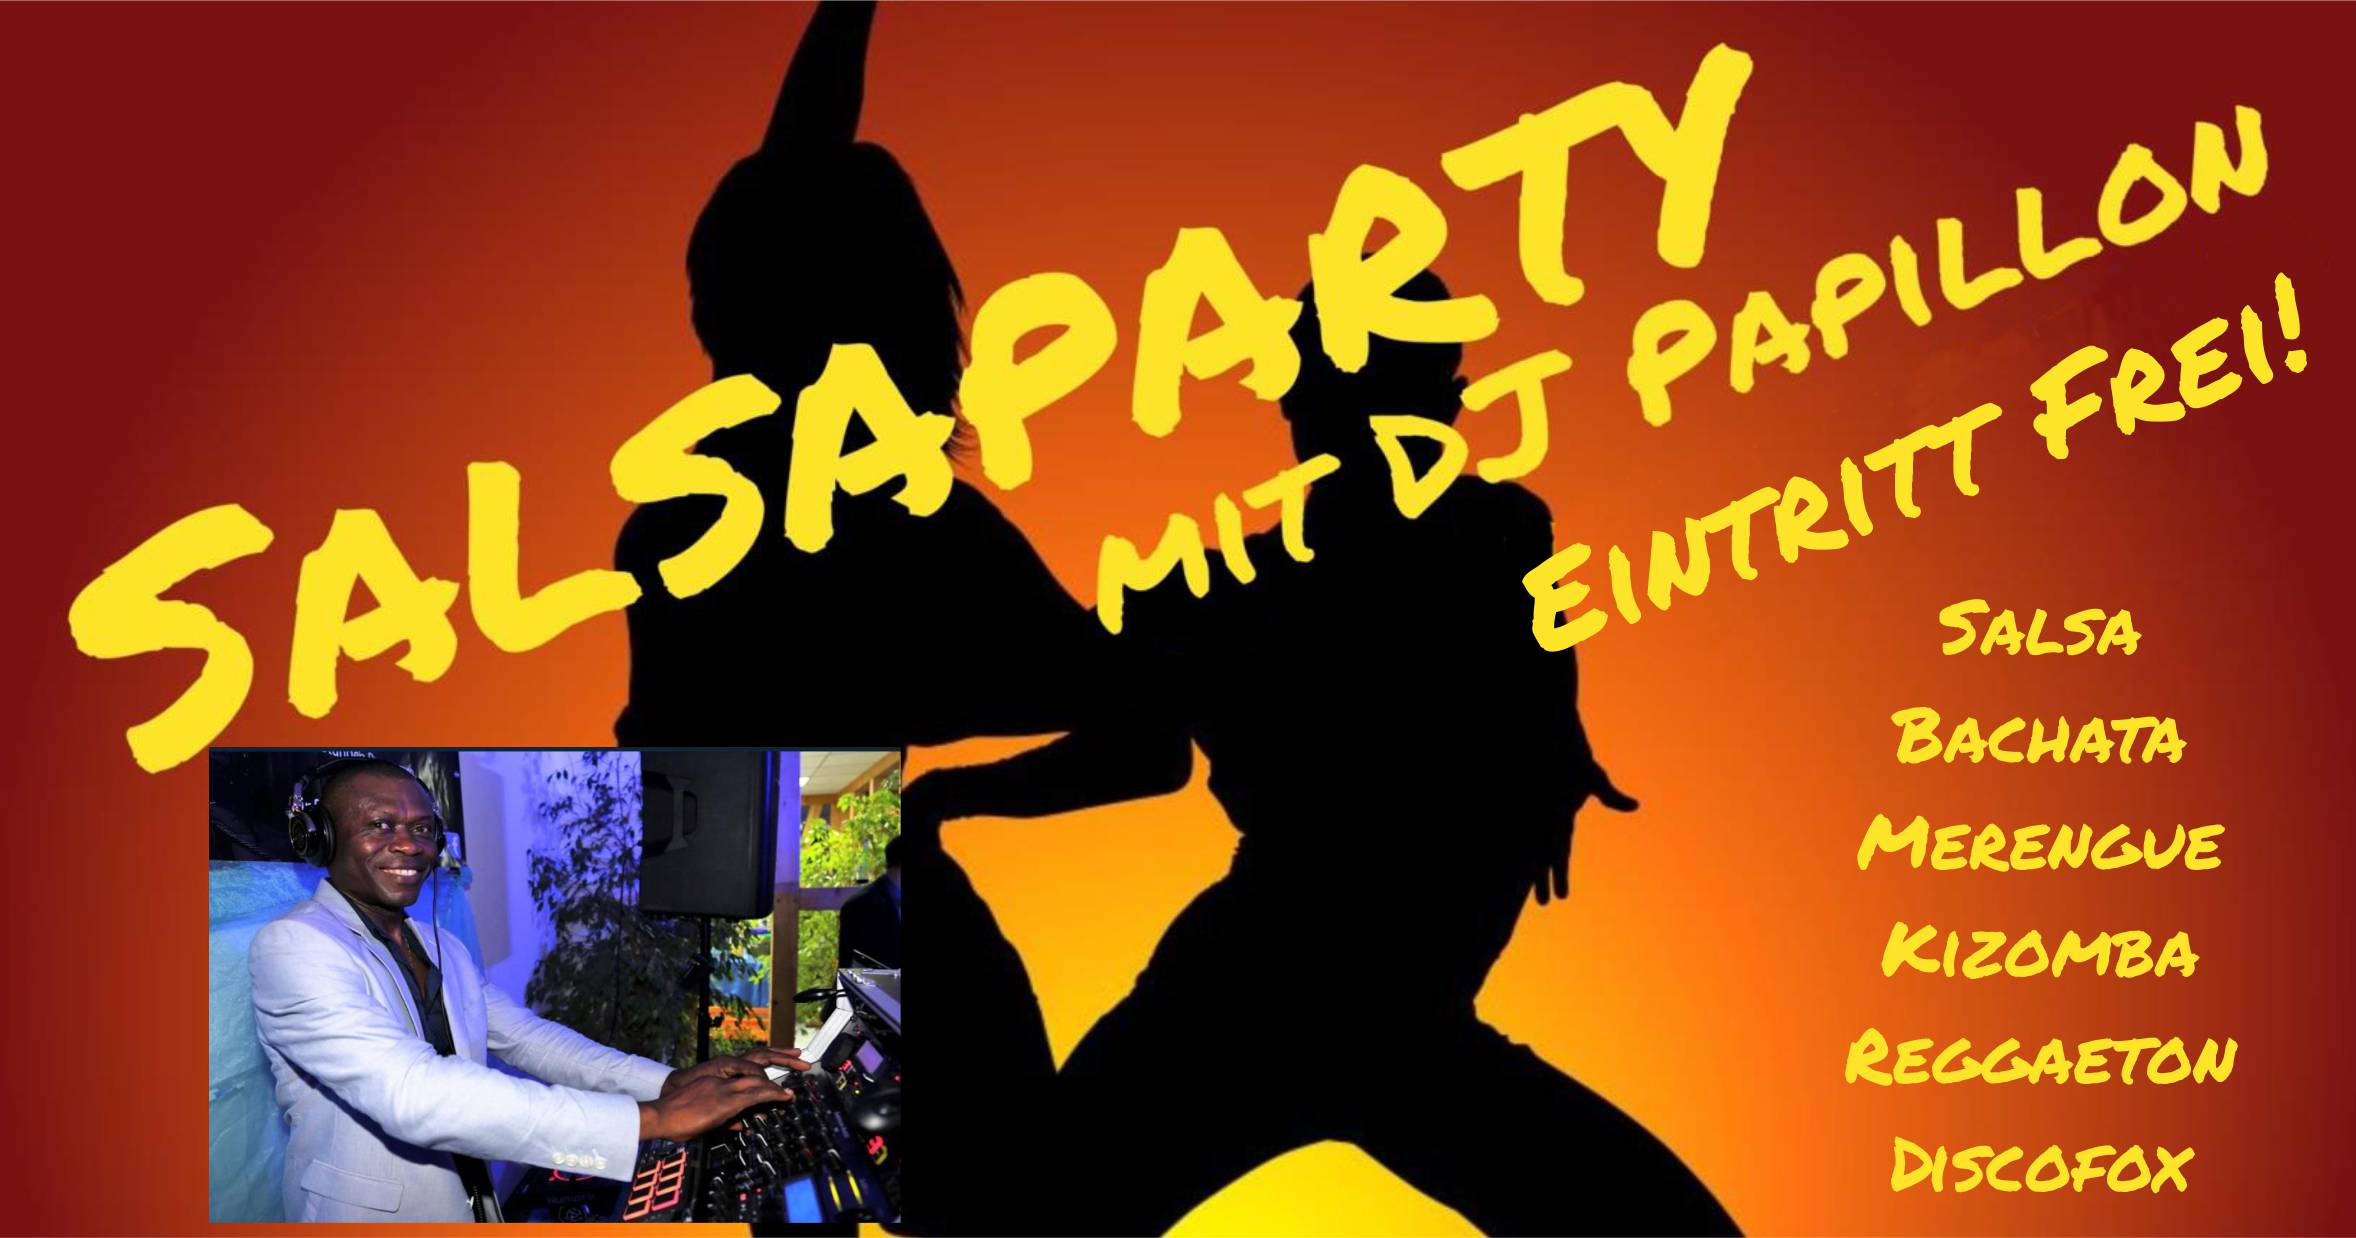 Salsa-Party mit DJ Papillon